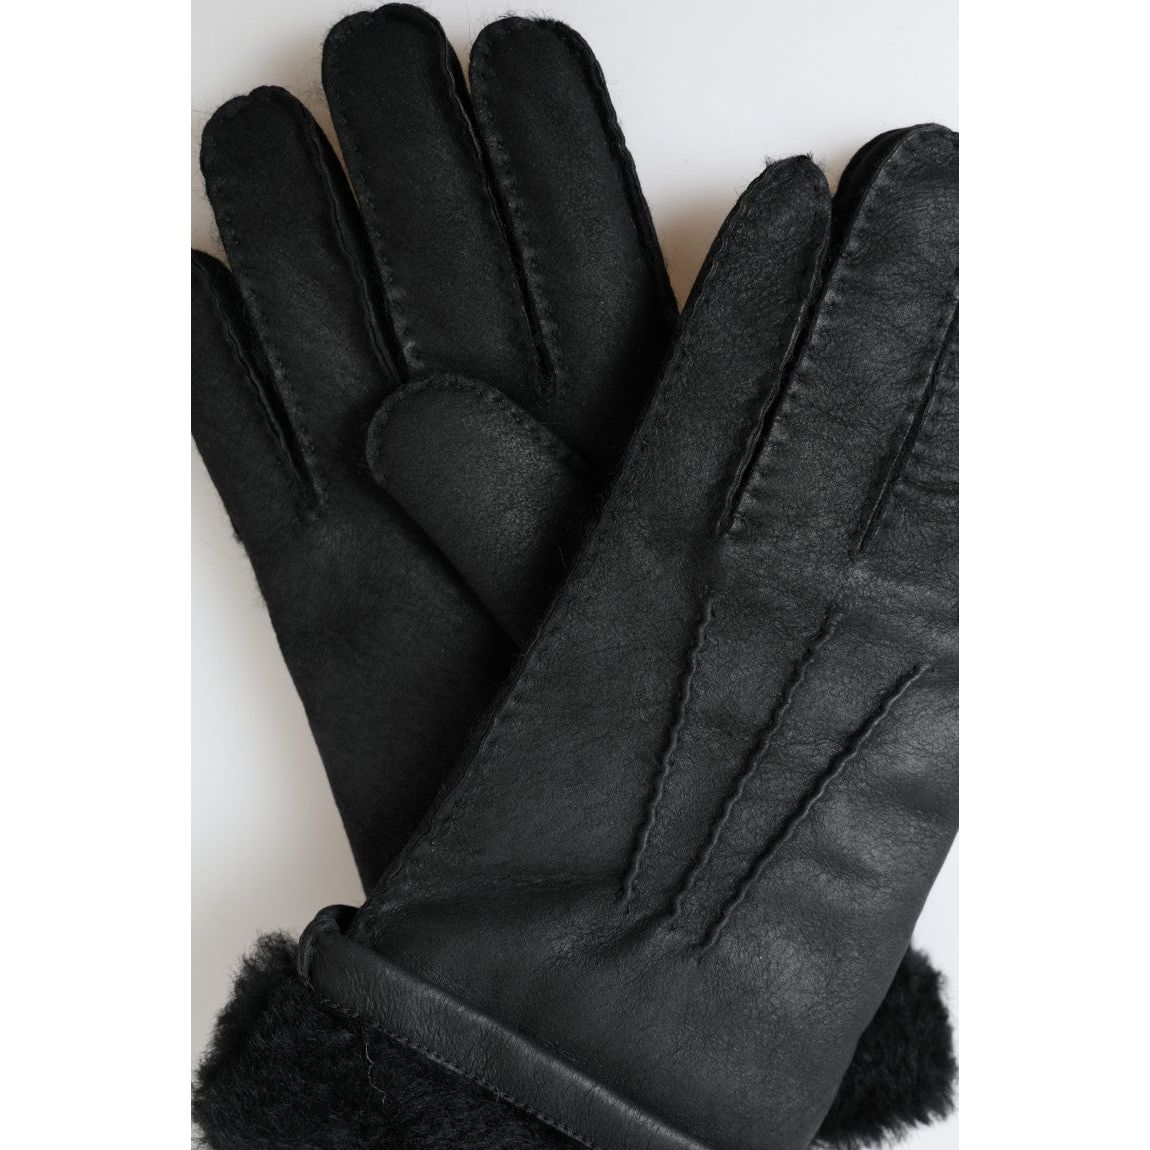 Dolce & Gabbana Elegant Black Leather Winter Gloves black-leather-fur-short-hands-mitten-men-gloves